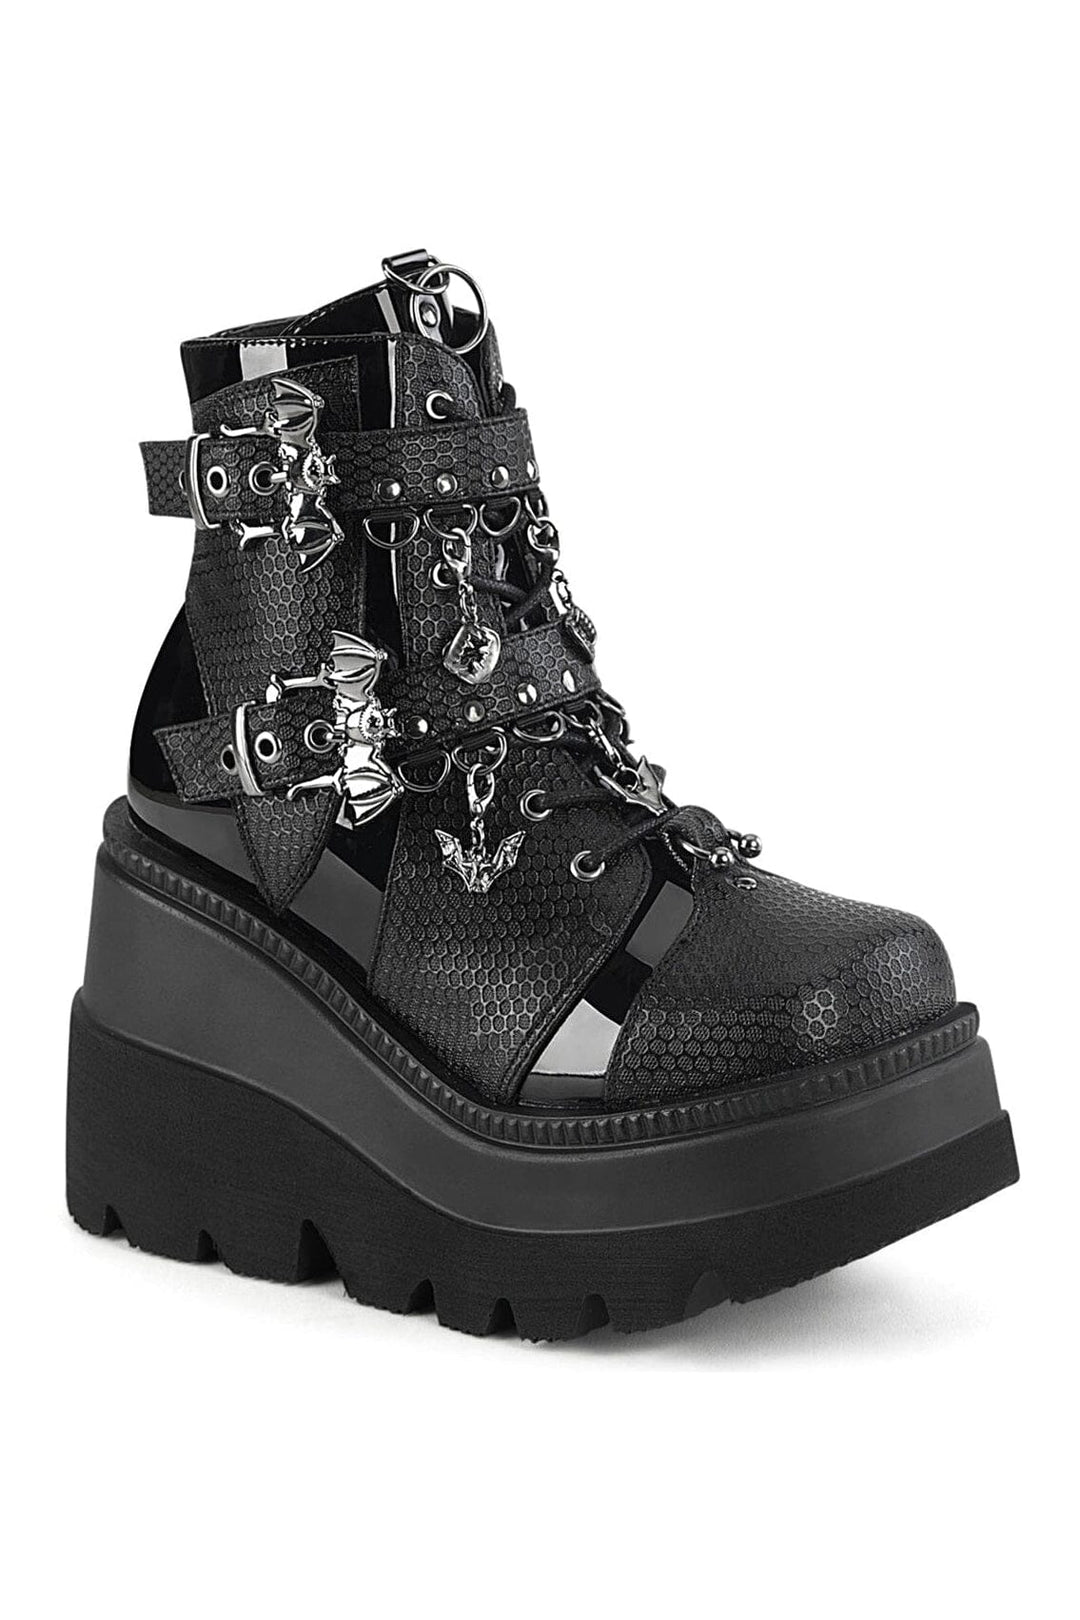 SHAKER-66 Black Vegan Leather Ankle Boot-Ankle Boots-Demonia-Black-10-Vegan Leather-SEXYSHOES.COM